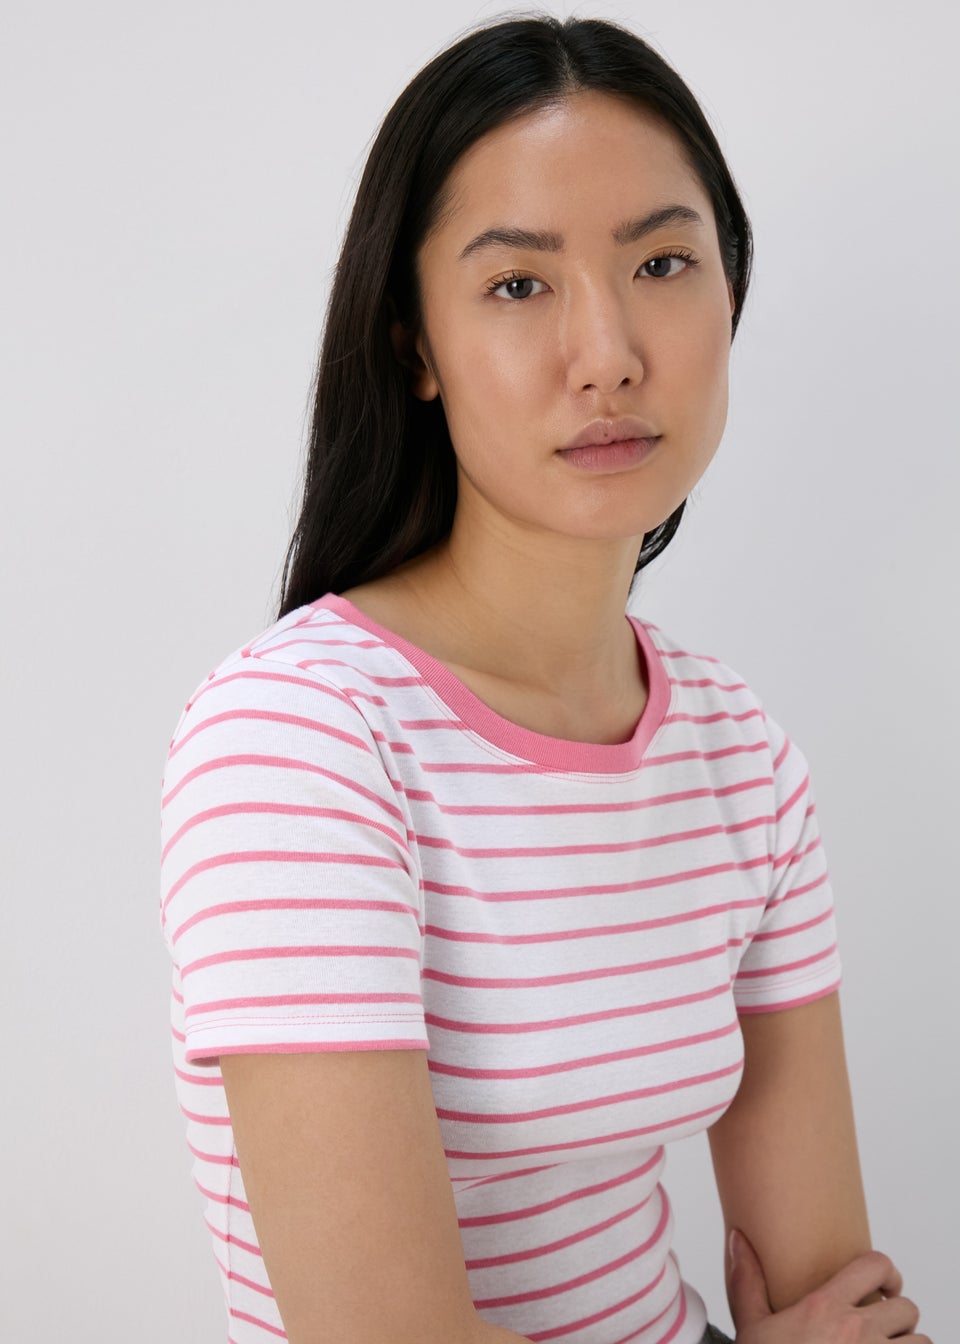 White & Pink Stripe T-Shirt